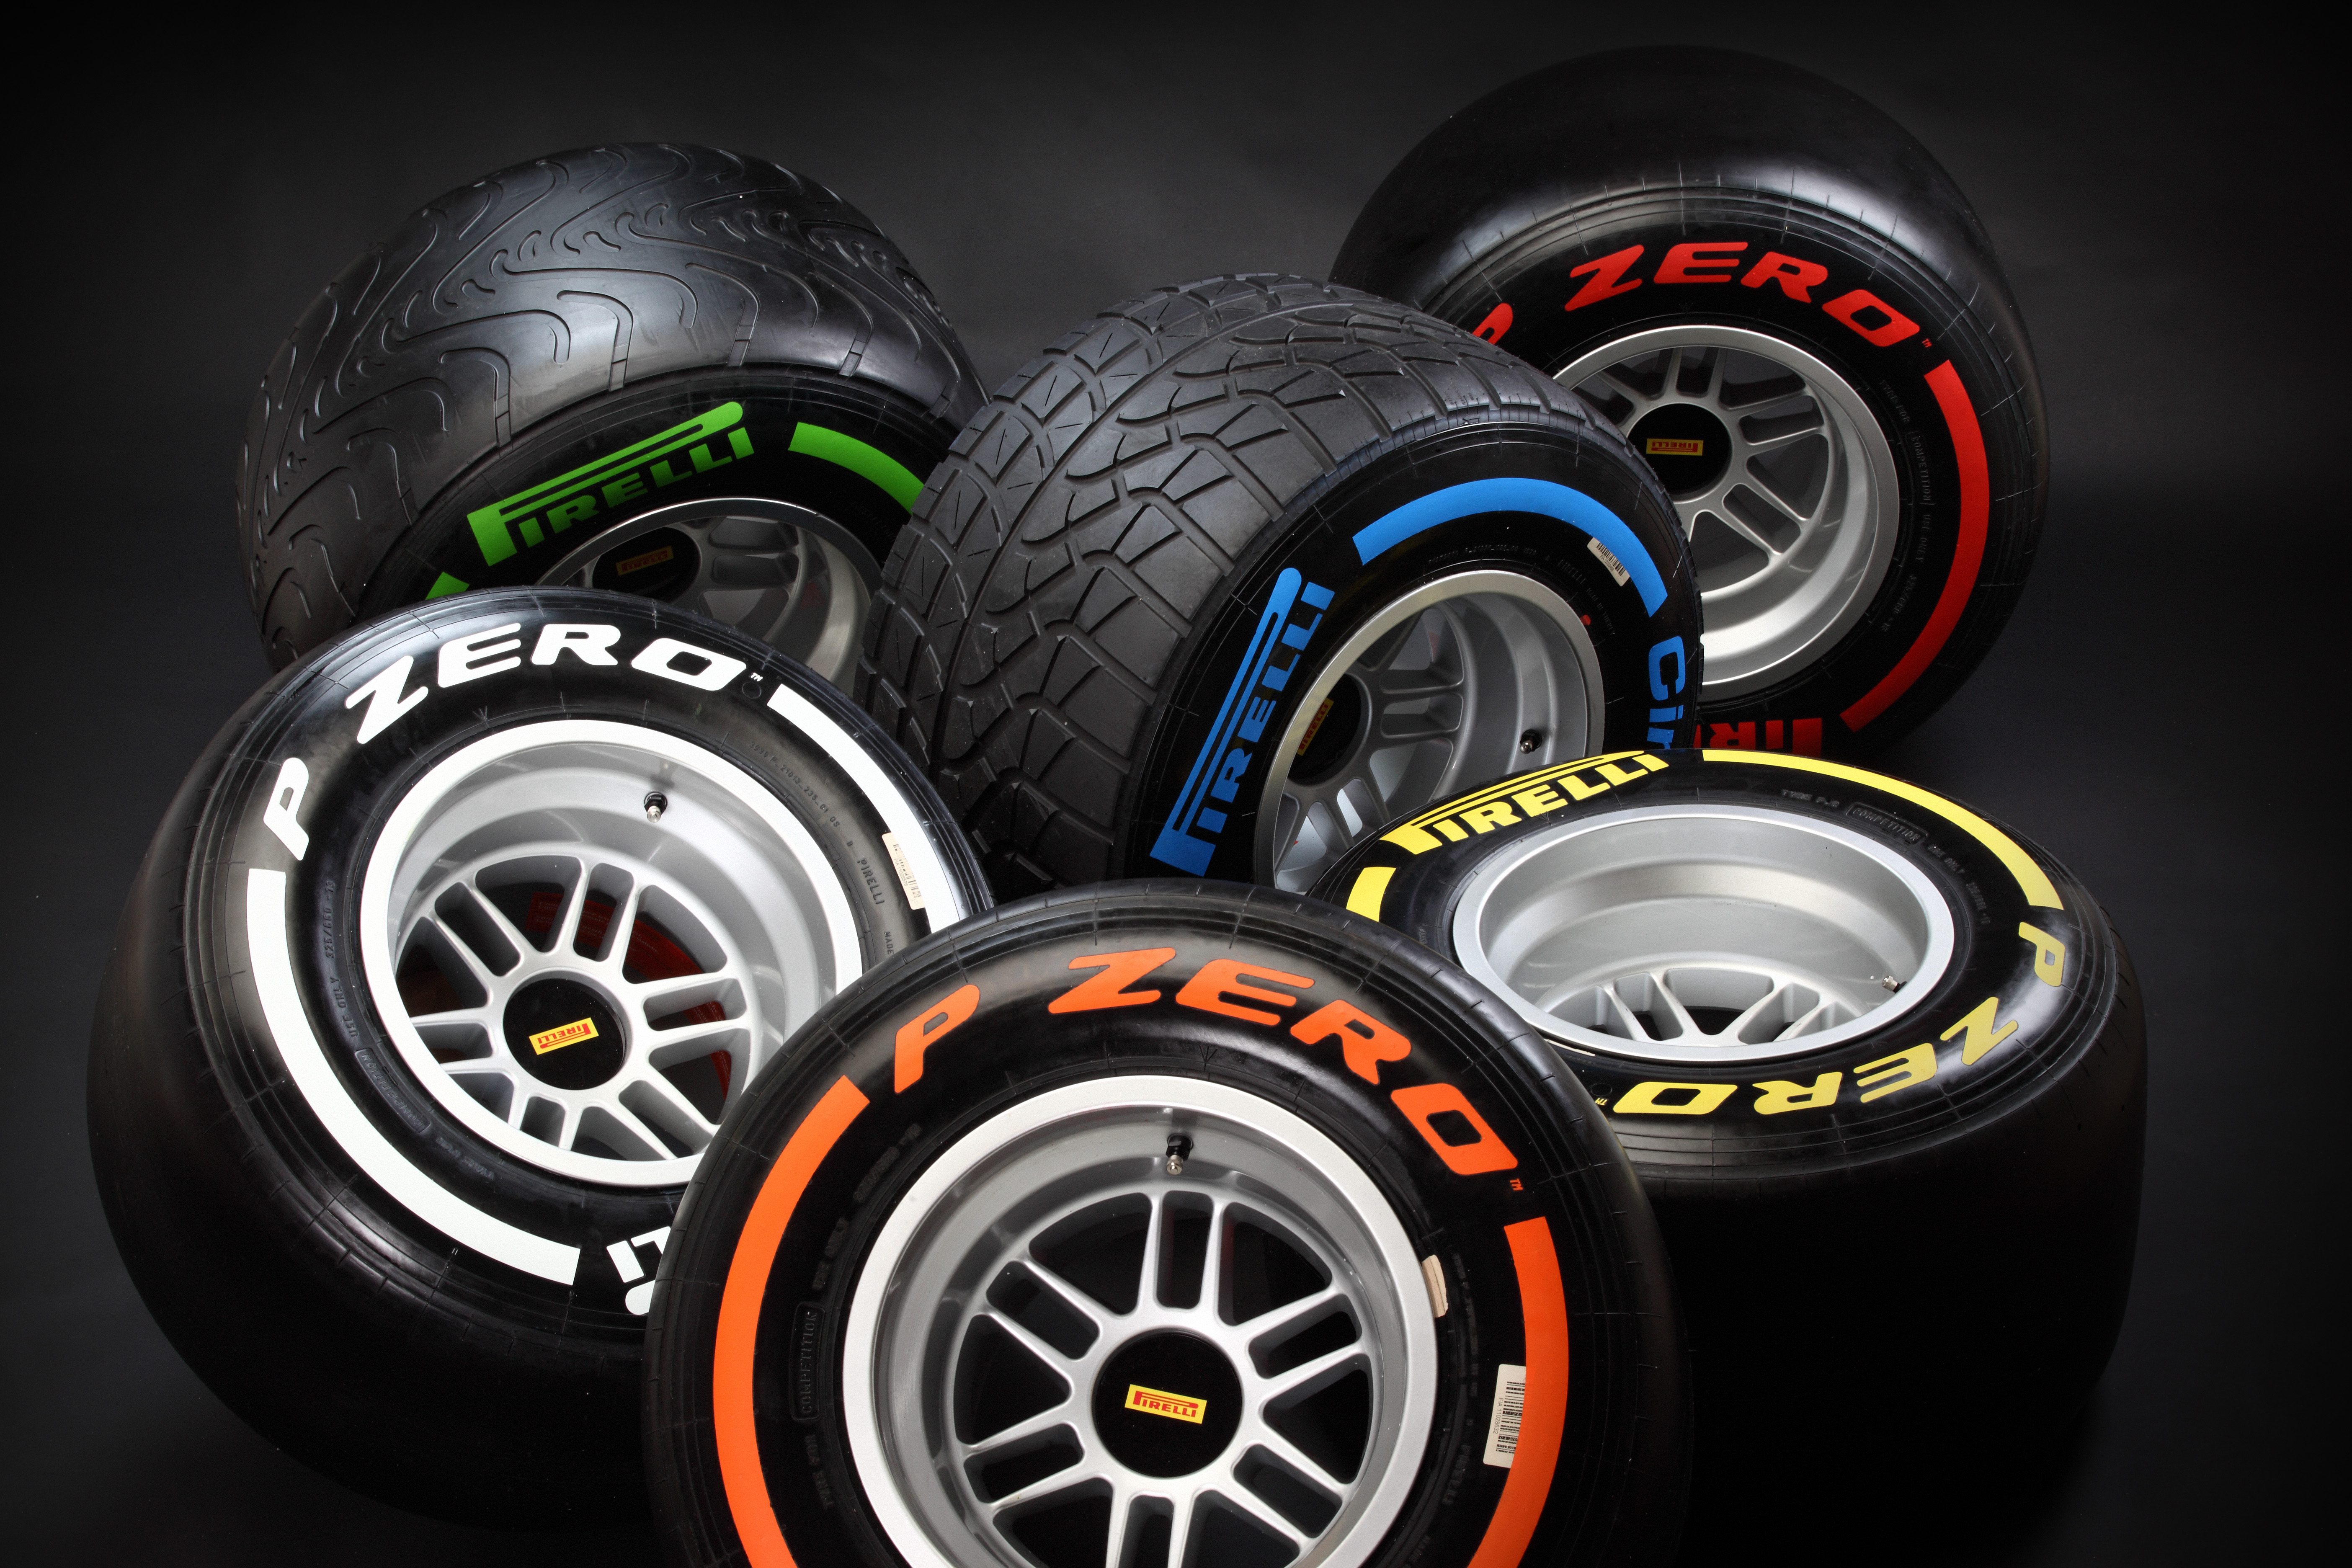 Pirelli: We will not change tyres.